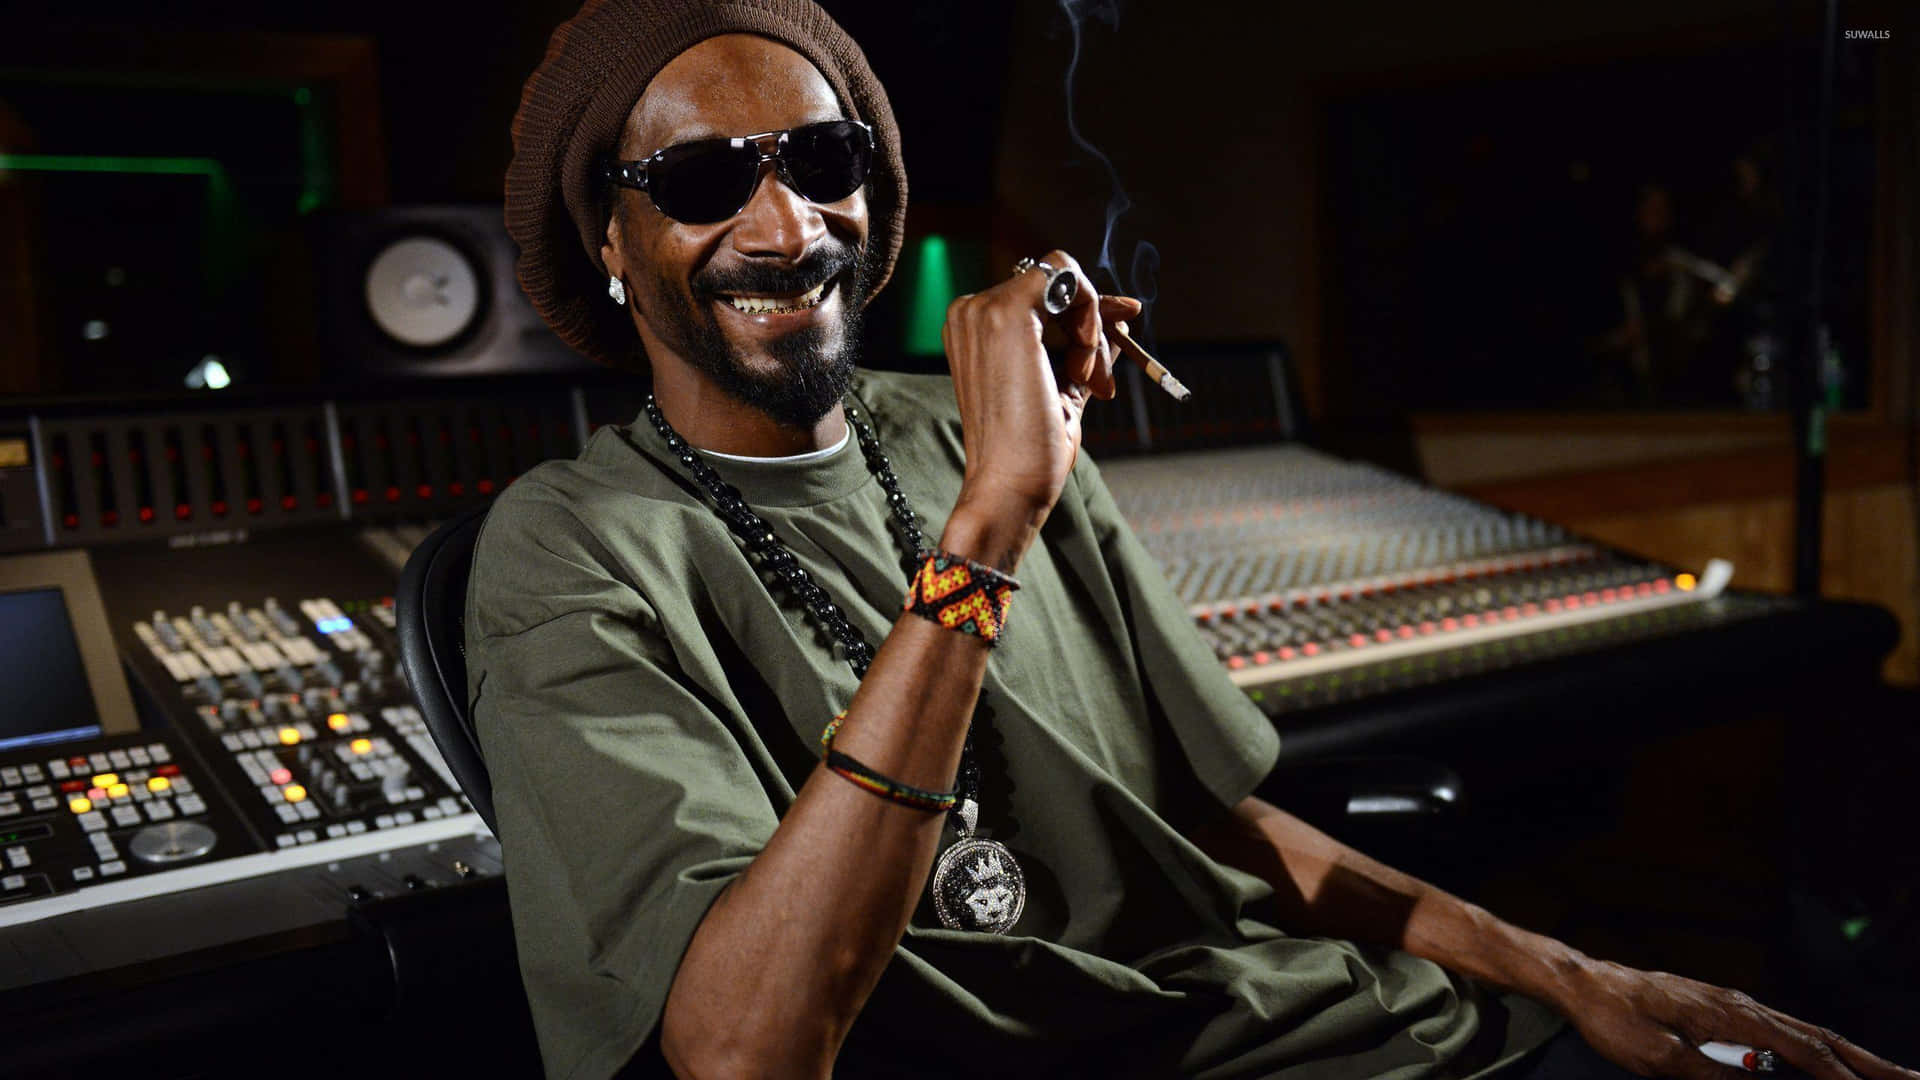 Snoop Dogg - Snoop Dogg - Snoop Dogg - Snoop Dogg - Snoop Dogg Wallpaper